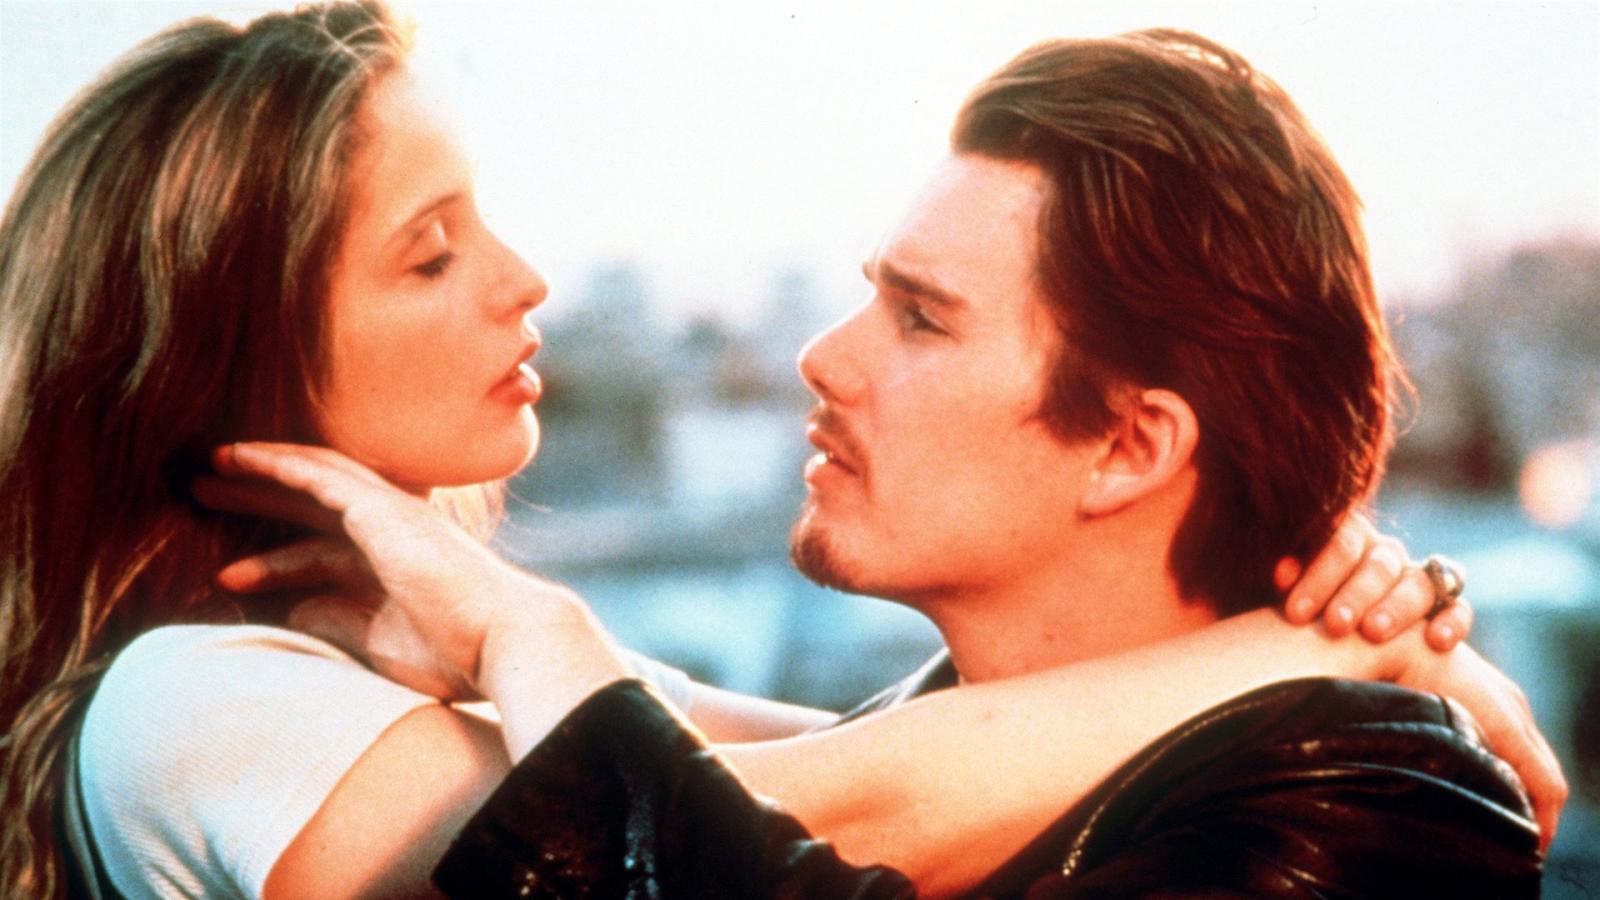 10 Romance Films with Heartbreaking Endings Prove Love Doesn't Always Win - image 9